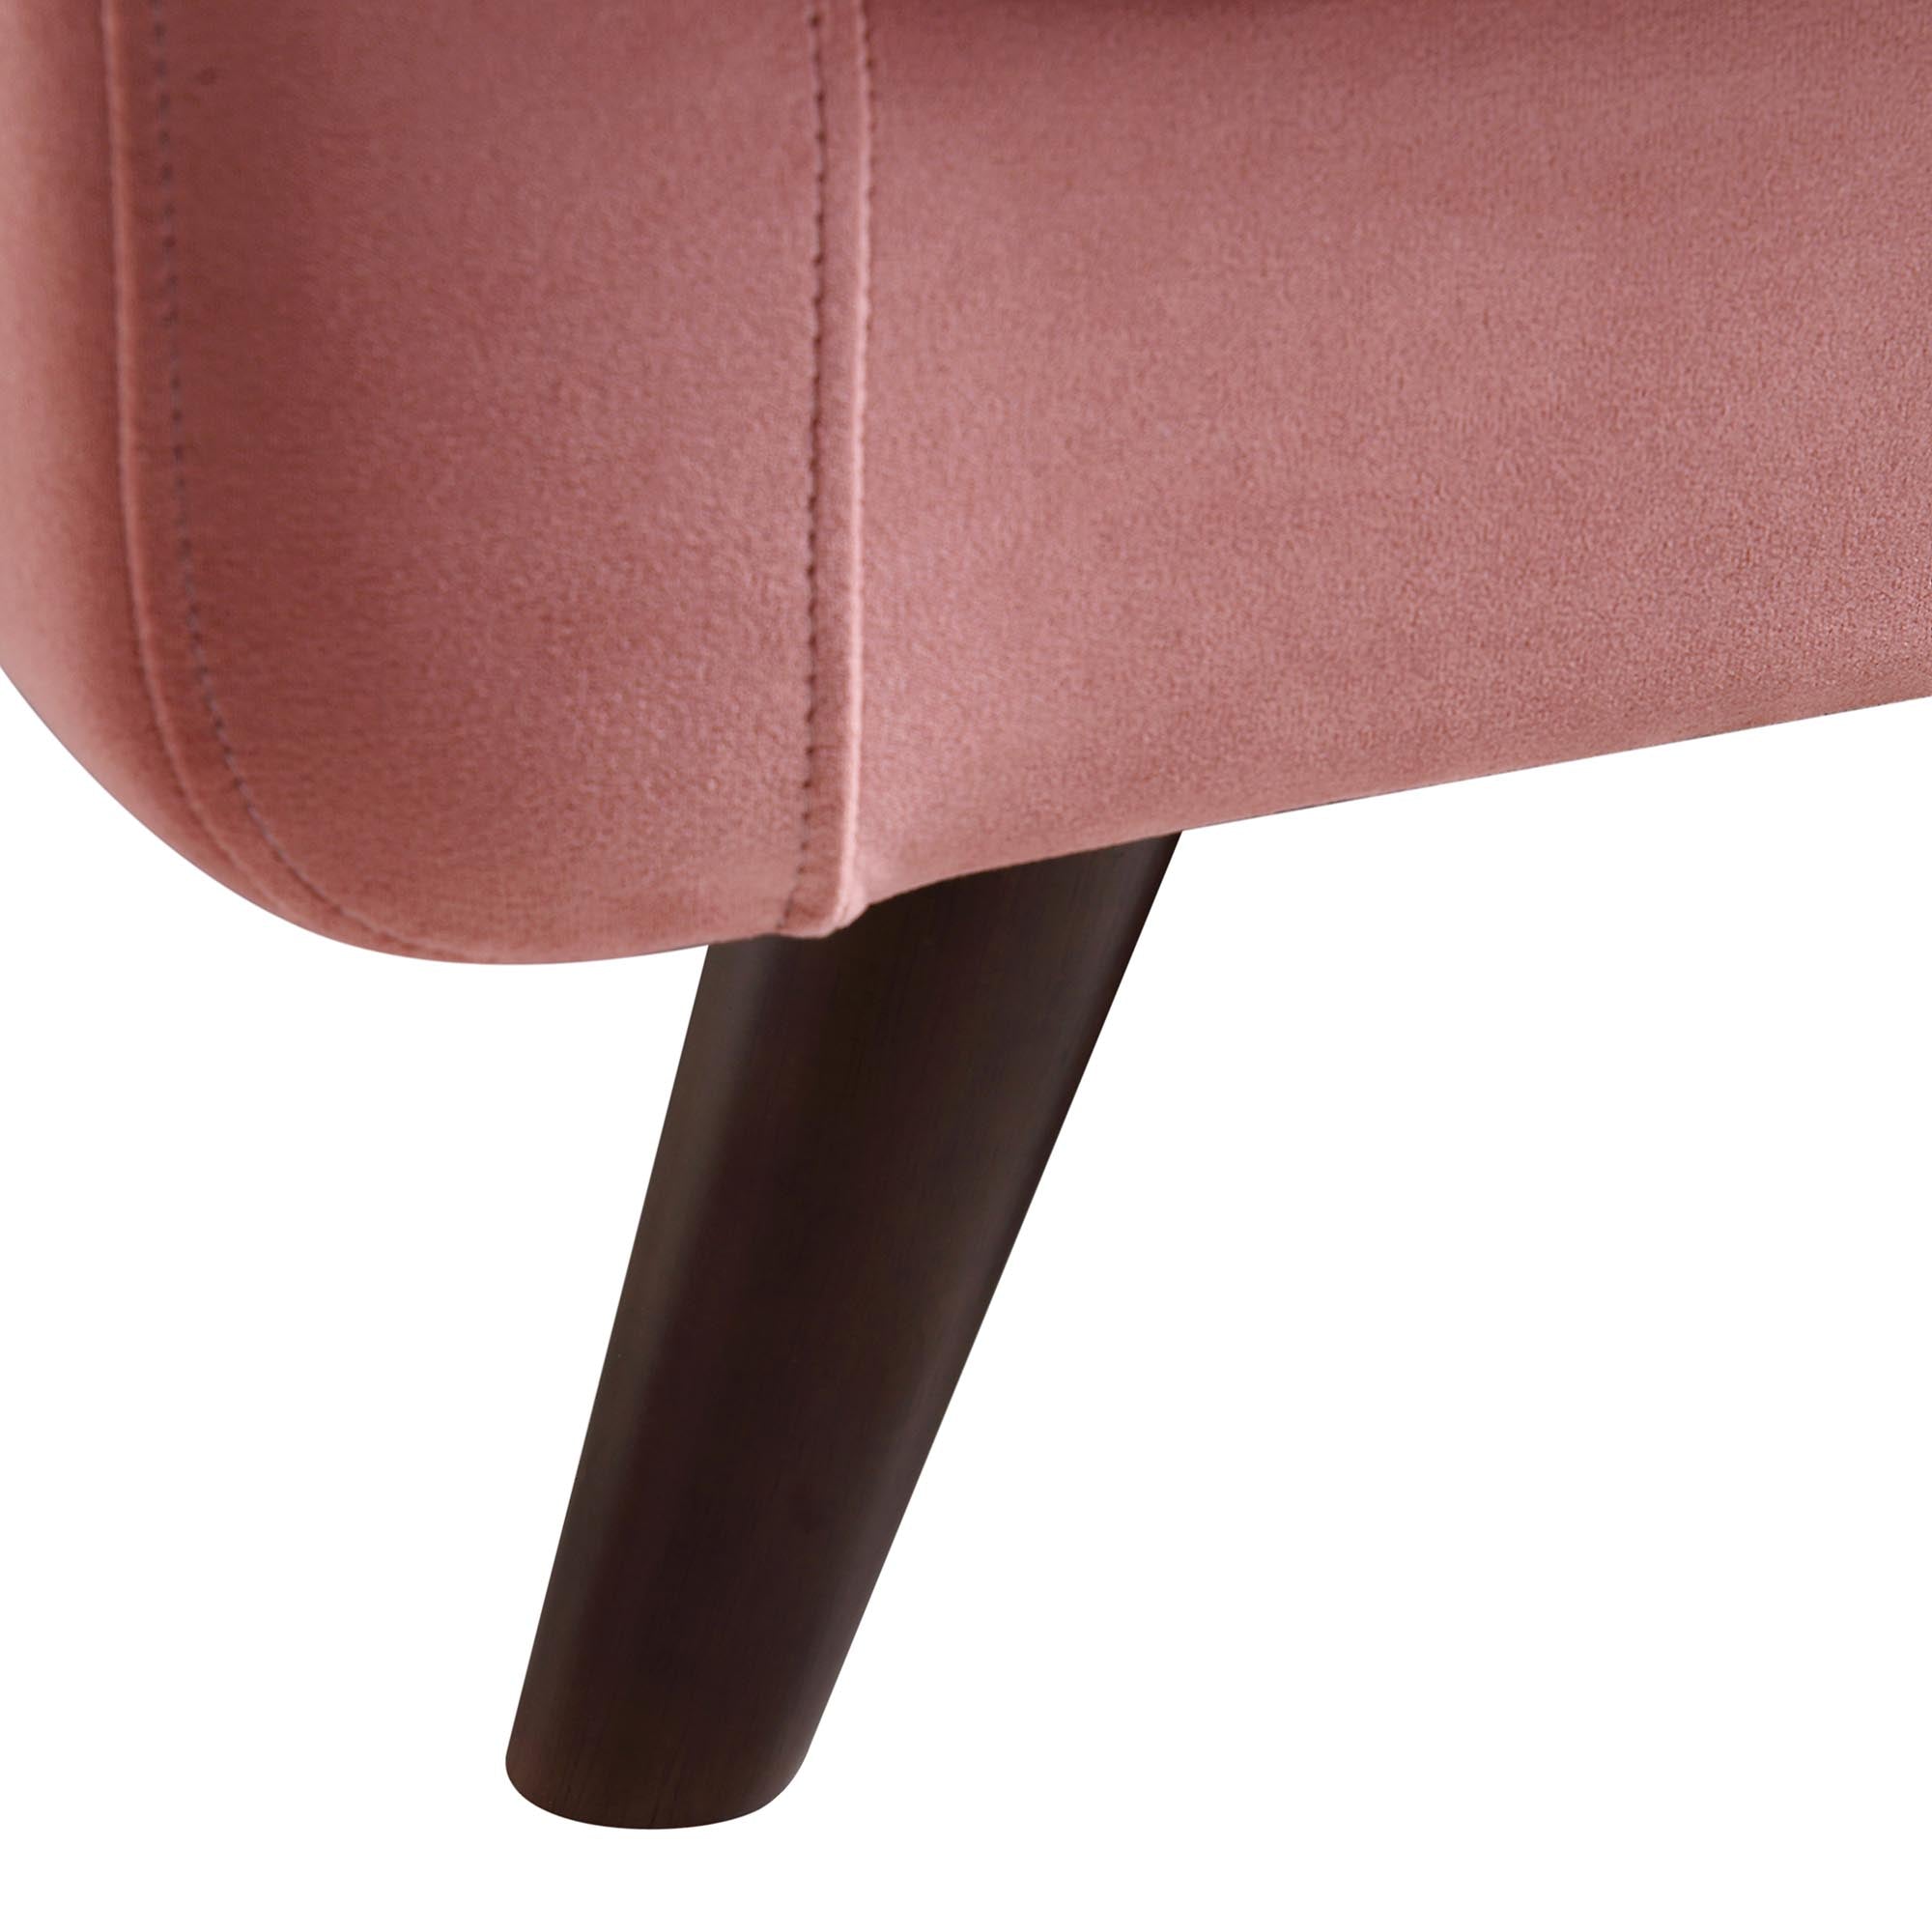 Clarence 3-Seater Sofa in Blush Pink Velvet